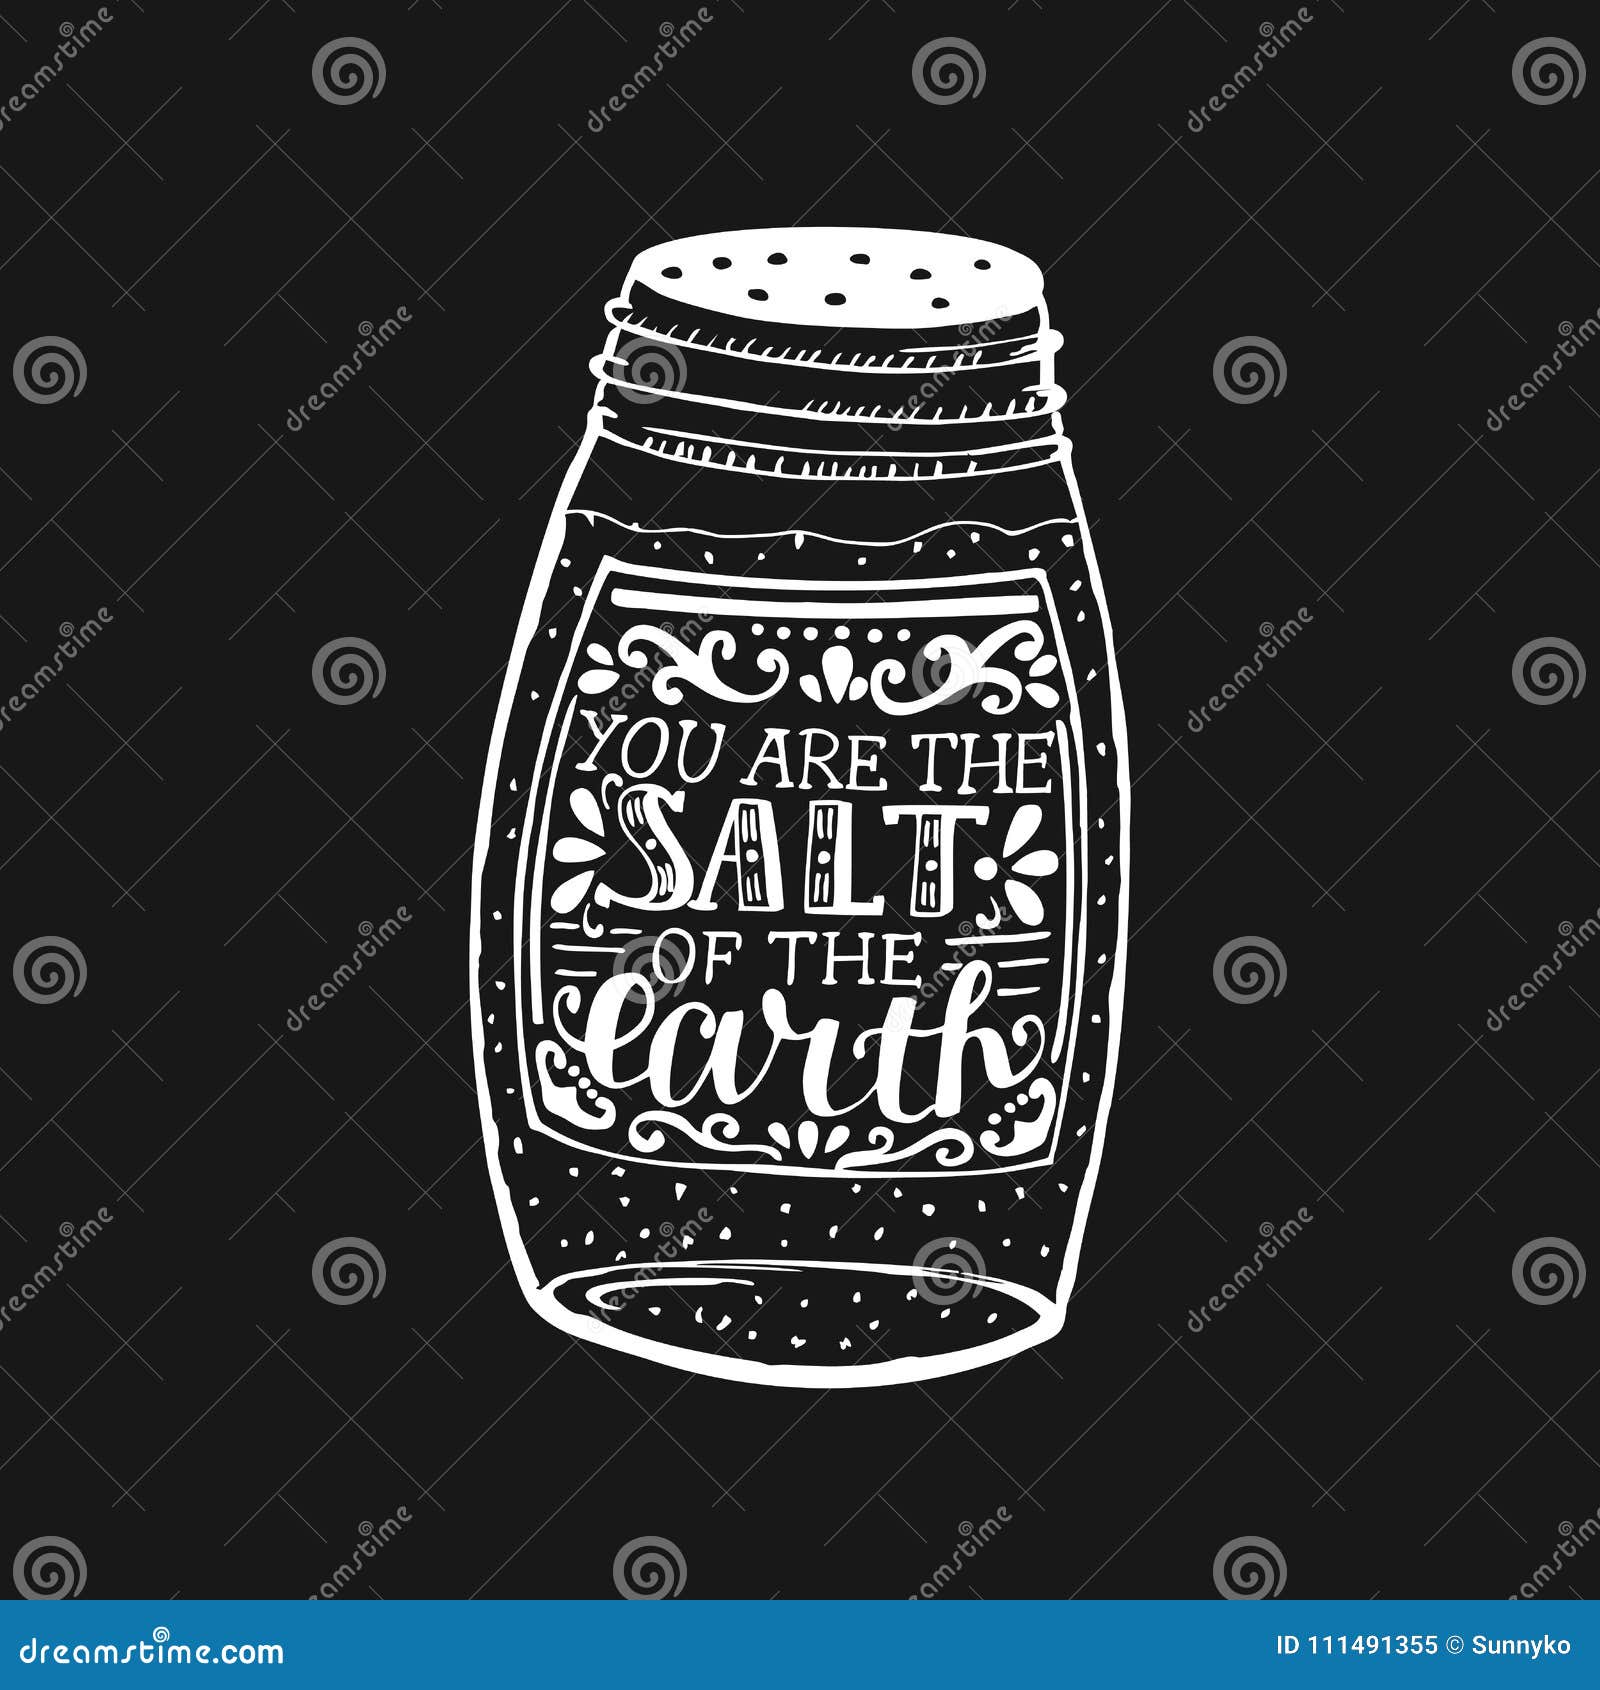 Salt to the earth